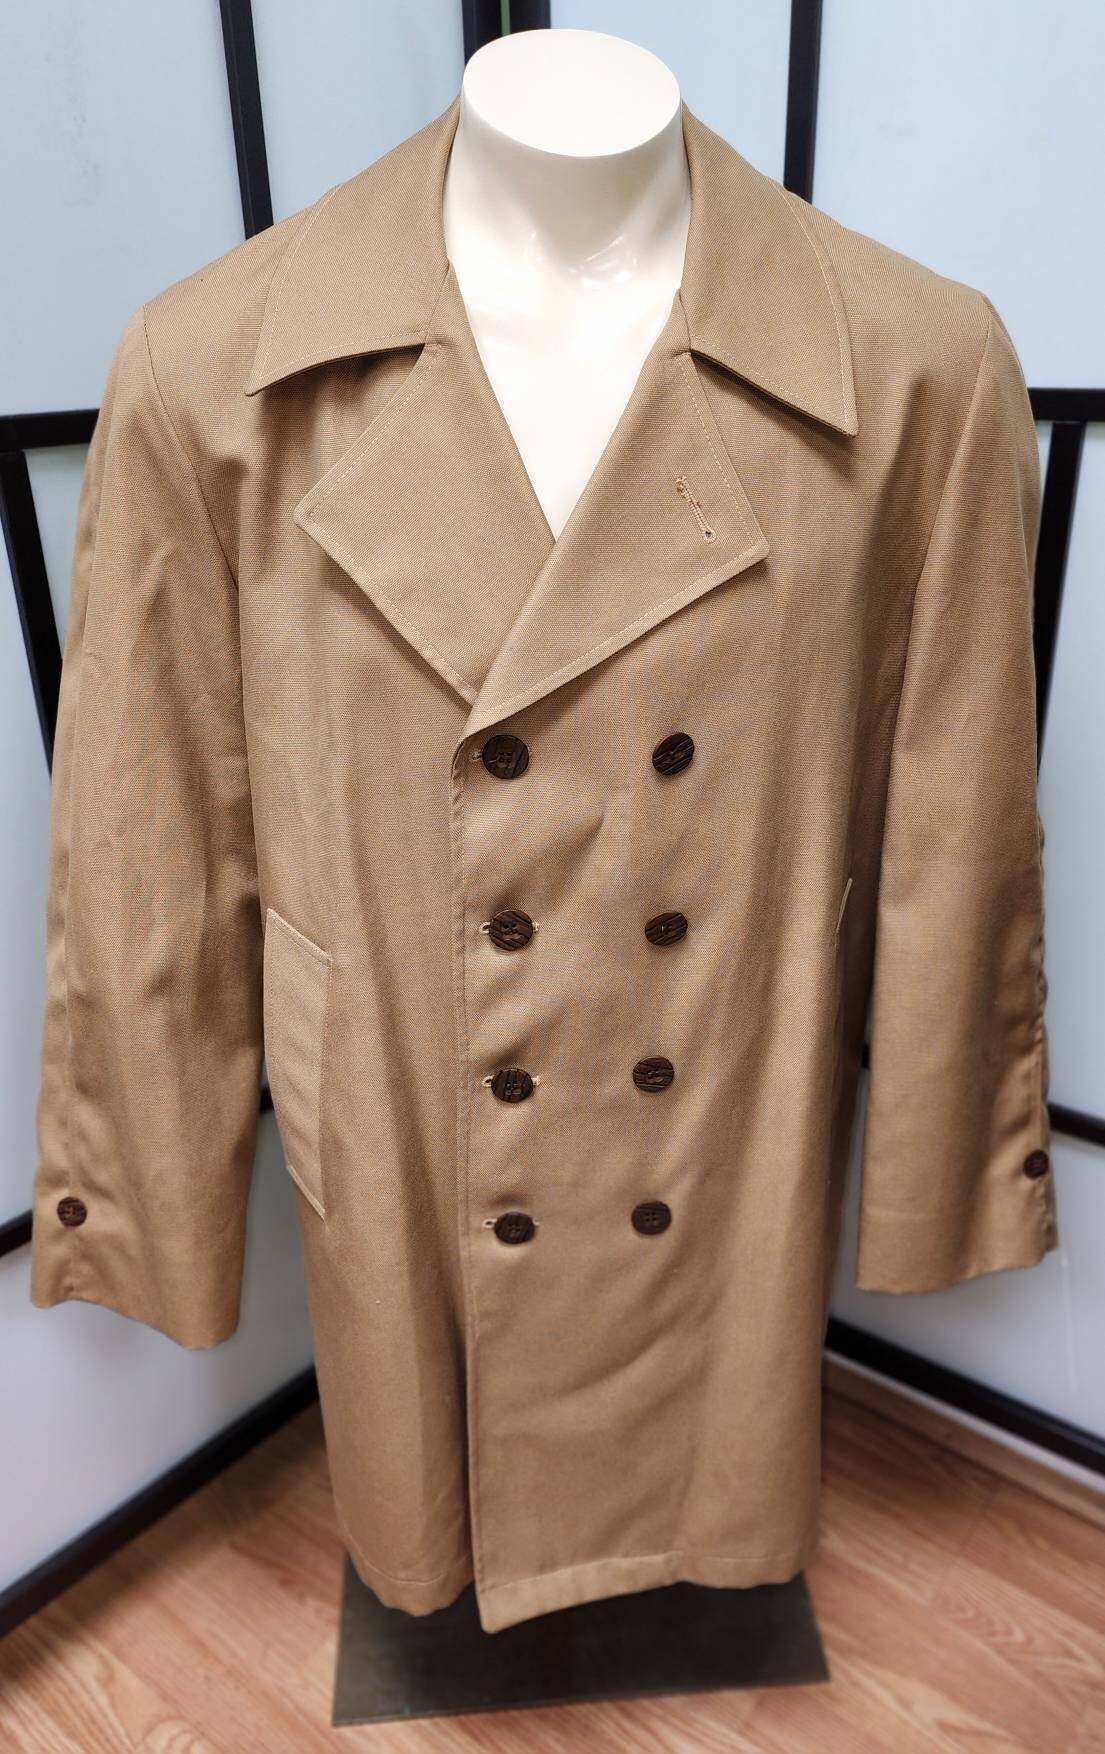 Men's Vintage Overcoat Classic 1960s 70s Light Brown Midlength Overcoat Coat Mod Boho L